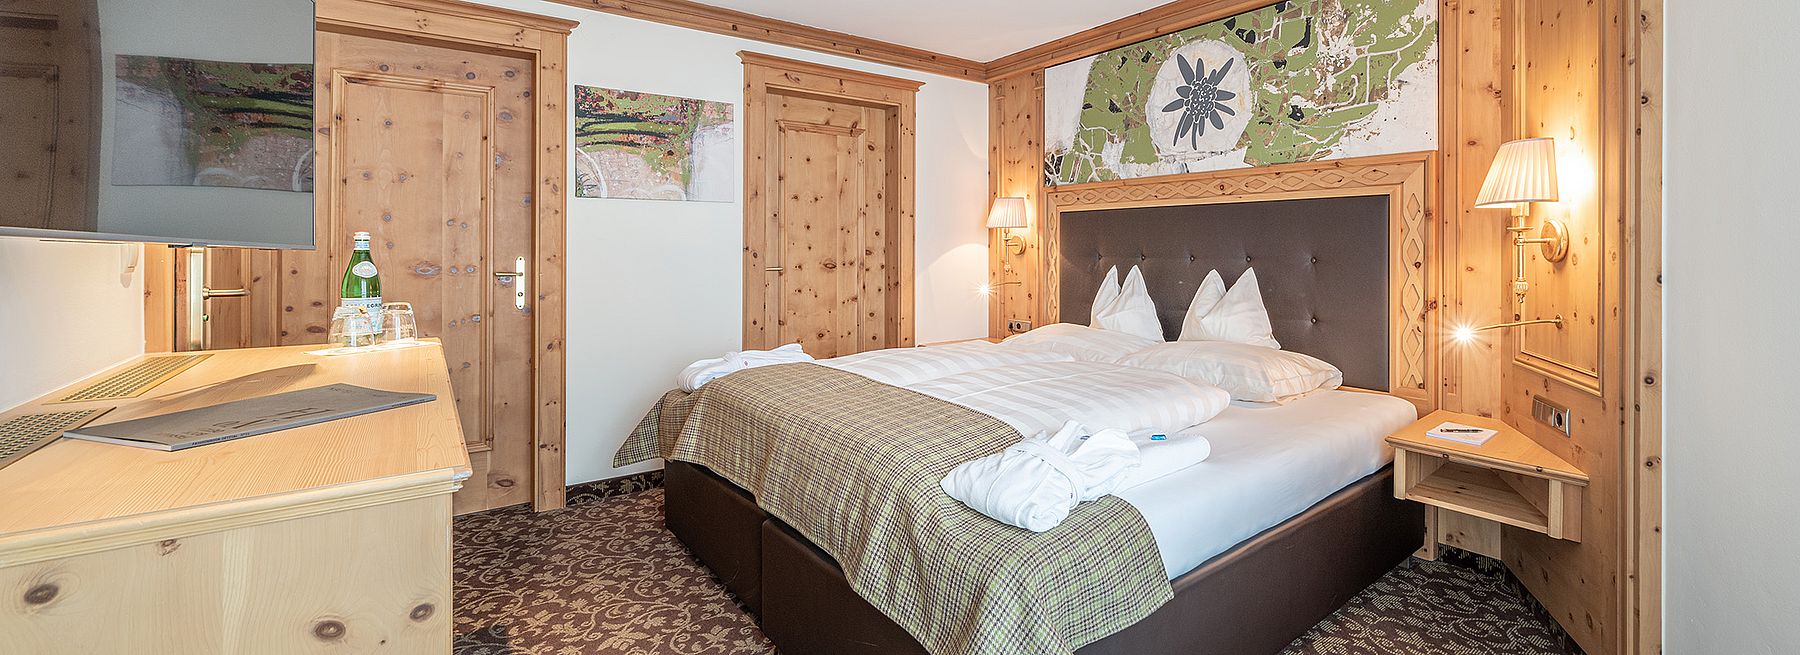 Room 319 of the ski hotel Edelweiss in Hochsölden